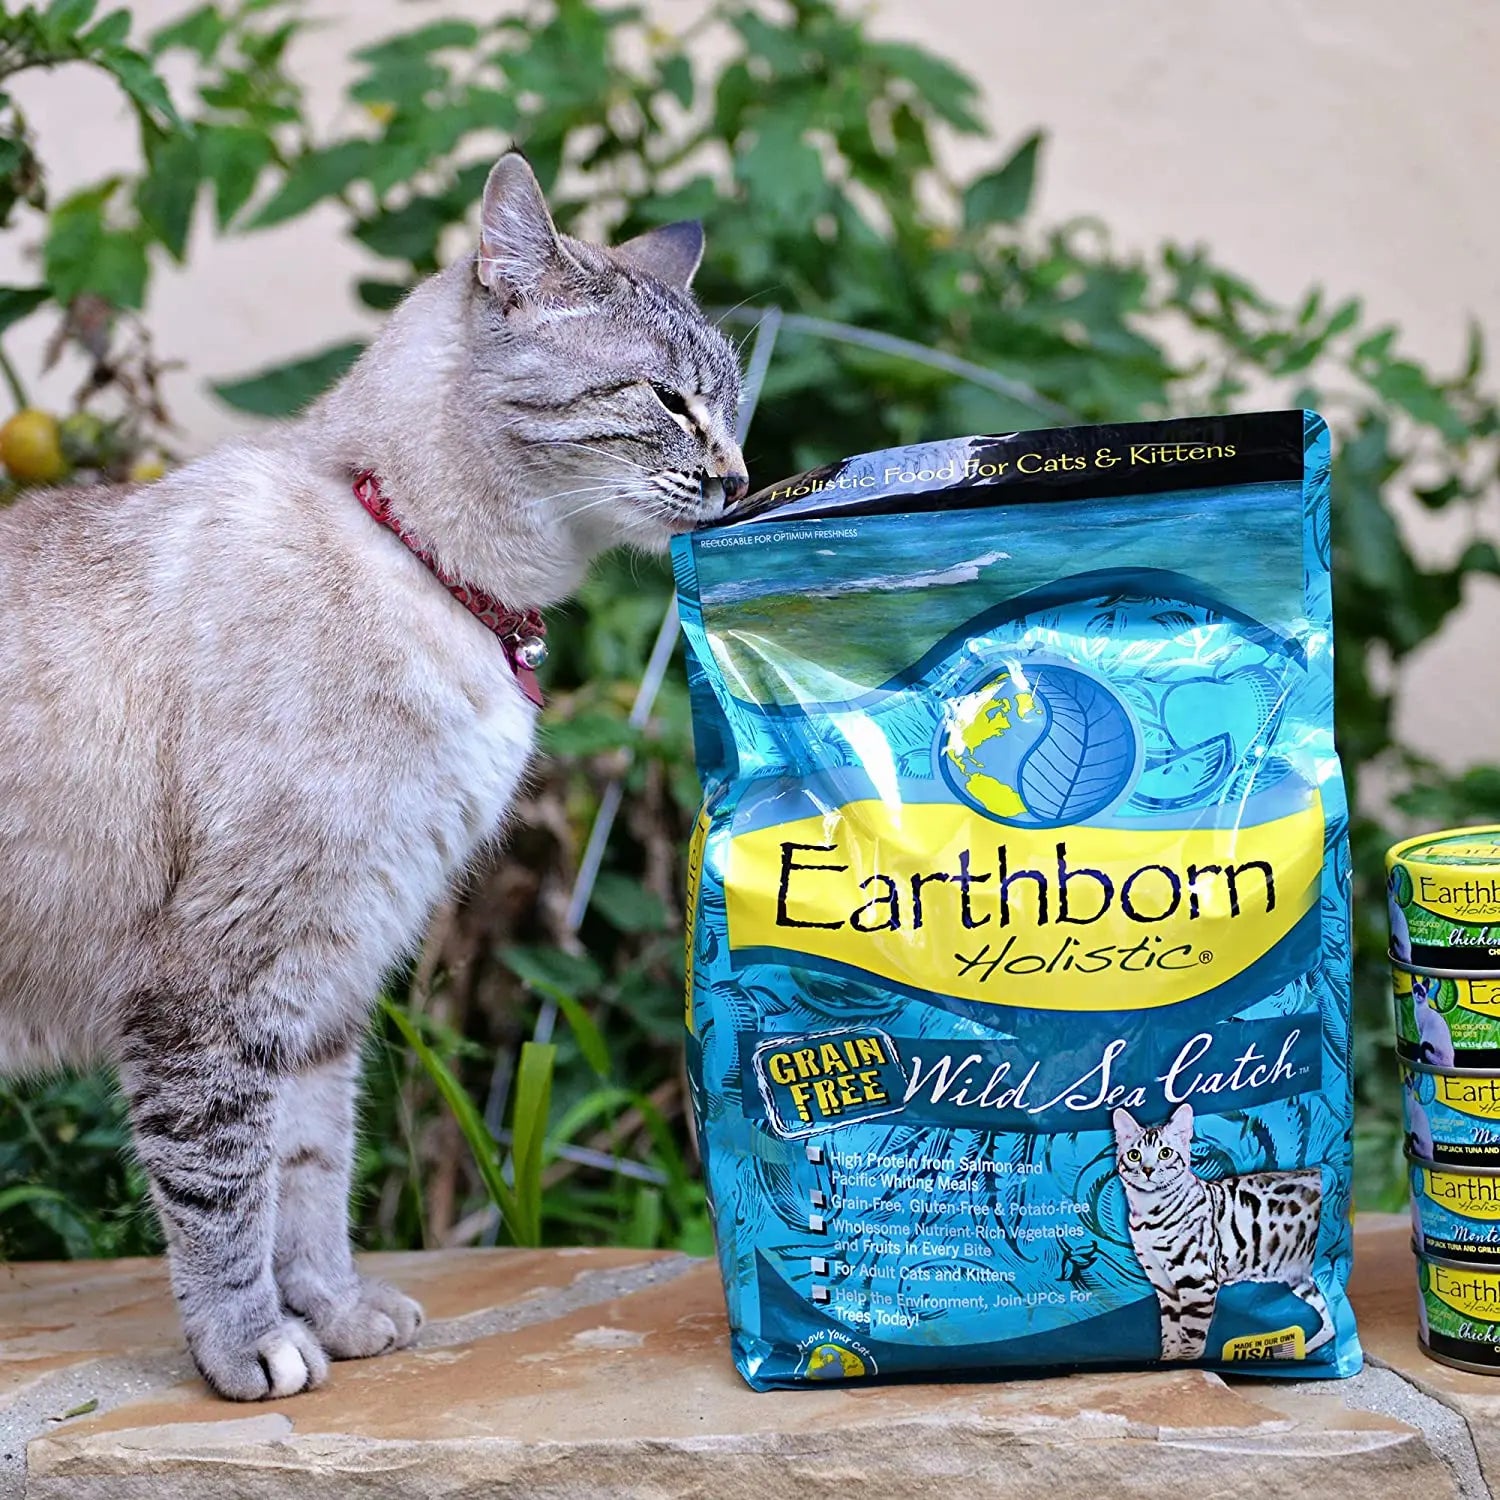 Earthborn Holistic® Grain Free Wild Sea Catch Cat Food Earthborn Holistic®